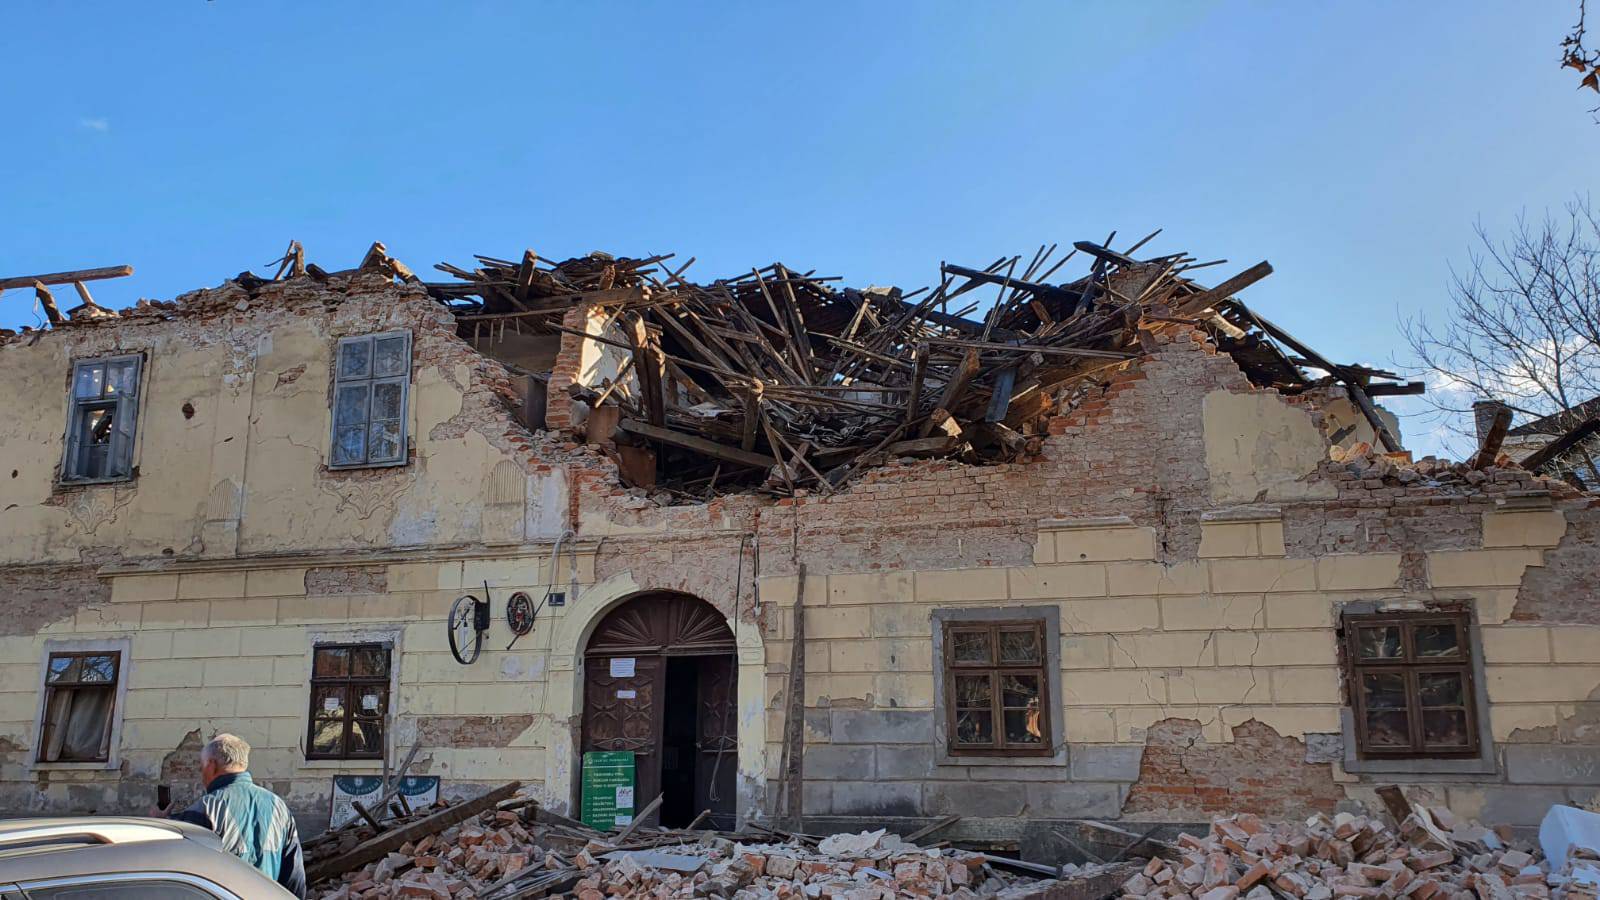 Pogledajte što je potres učinio od Siska, Petrinje, Zagreba...